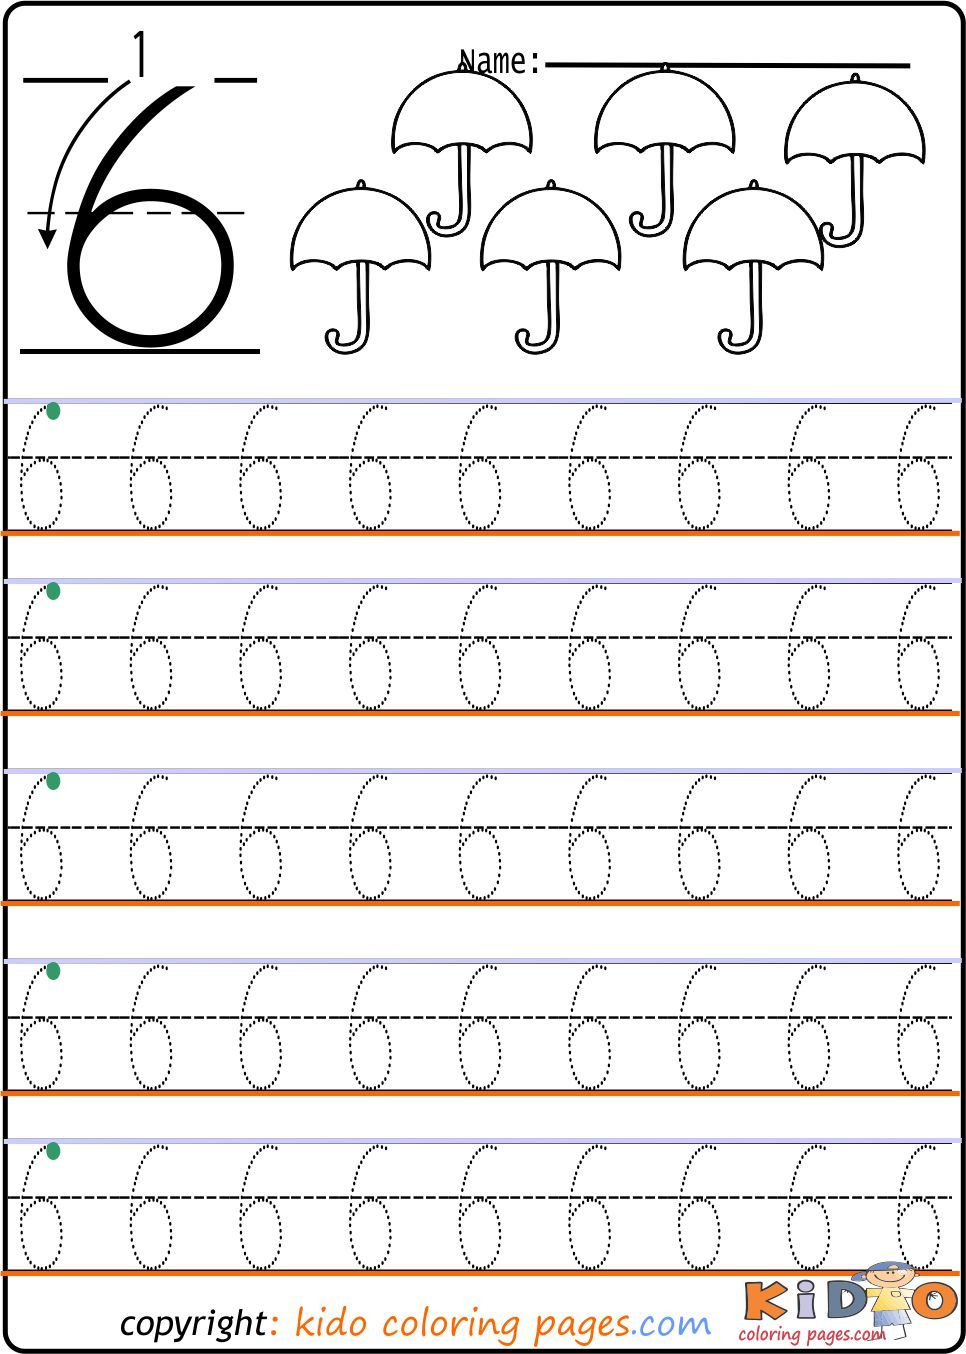 number-6-tracing-worksheets-for-kindergarten-kids-coloring-pages-a24